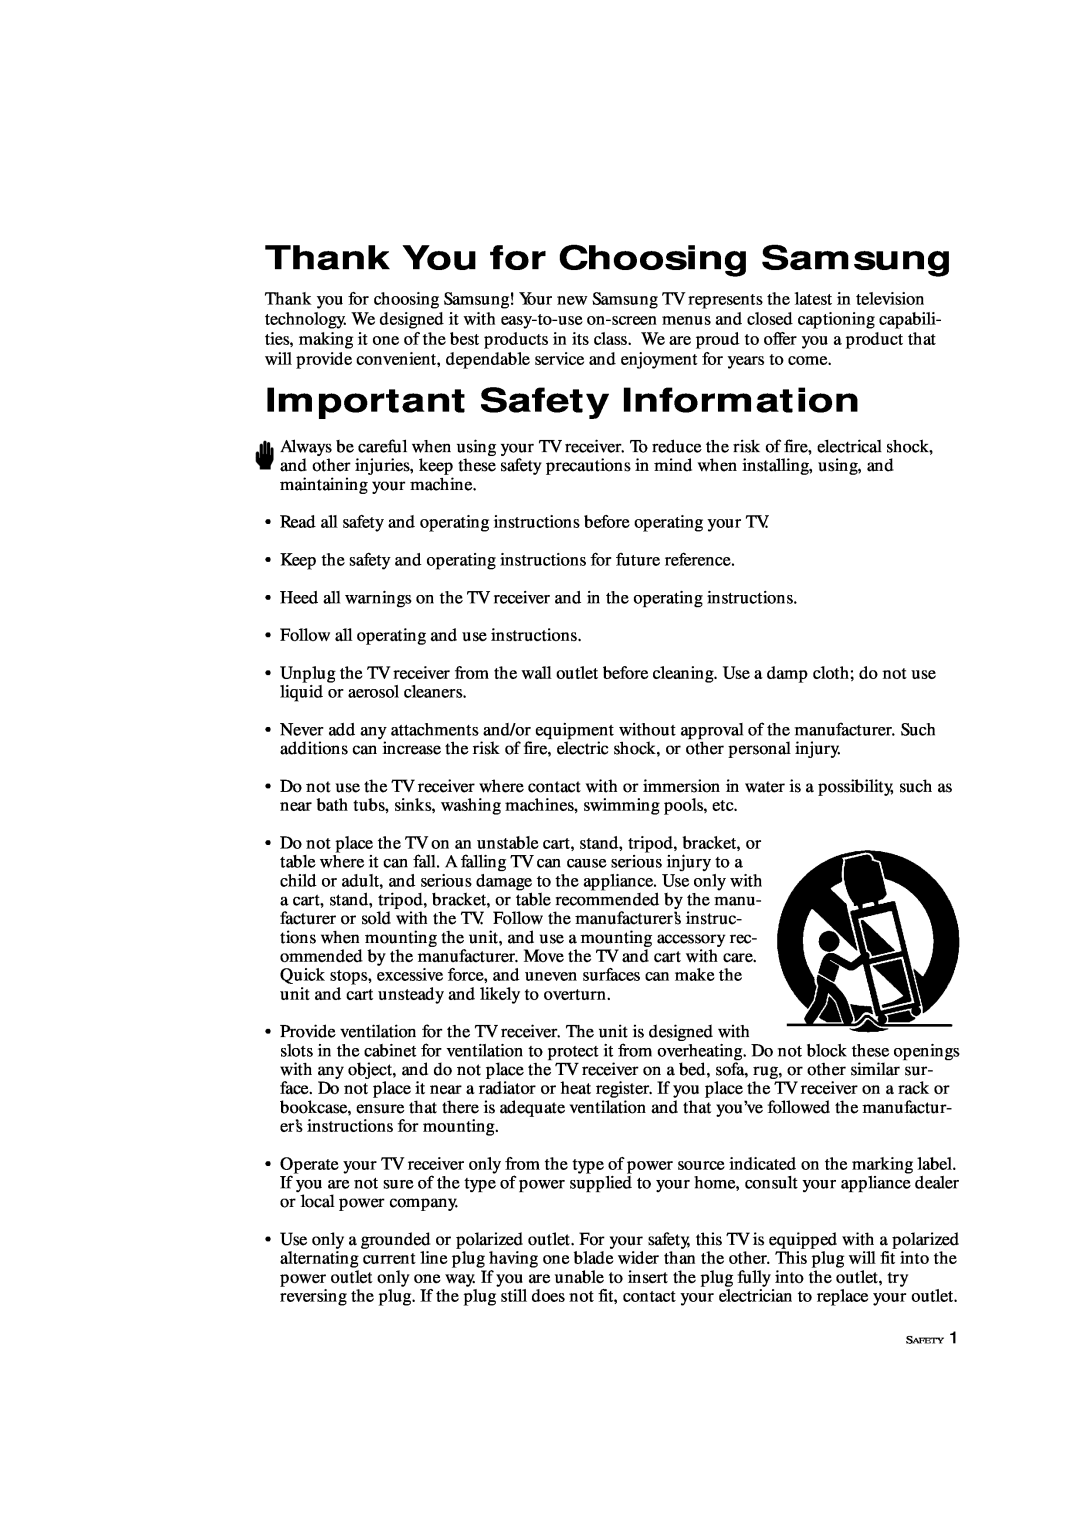 Samsung TXK 3276, TXL 3276, TXL 3676, TXK 3676 manual Thank You for Choosing Samsung, Important Safety Information 